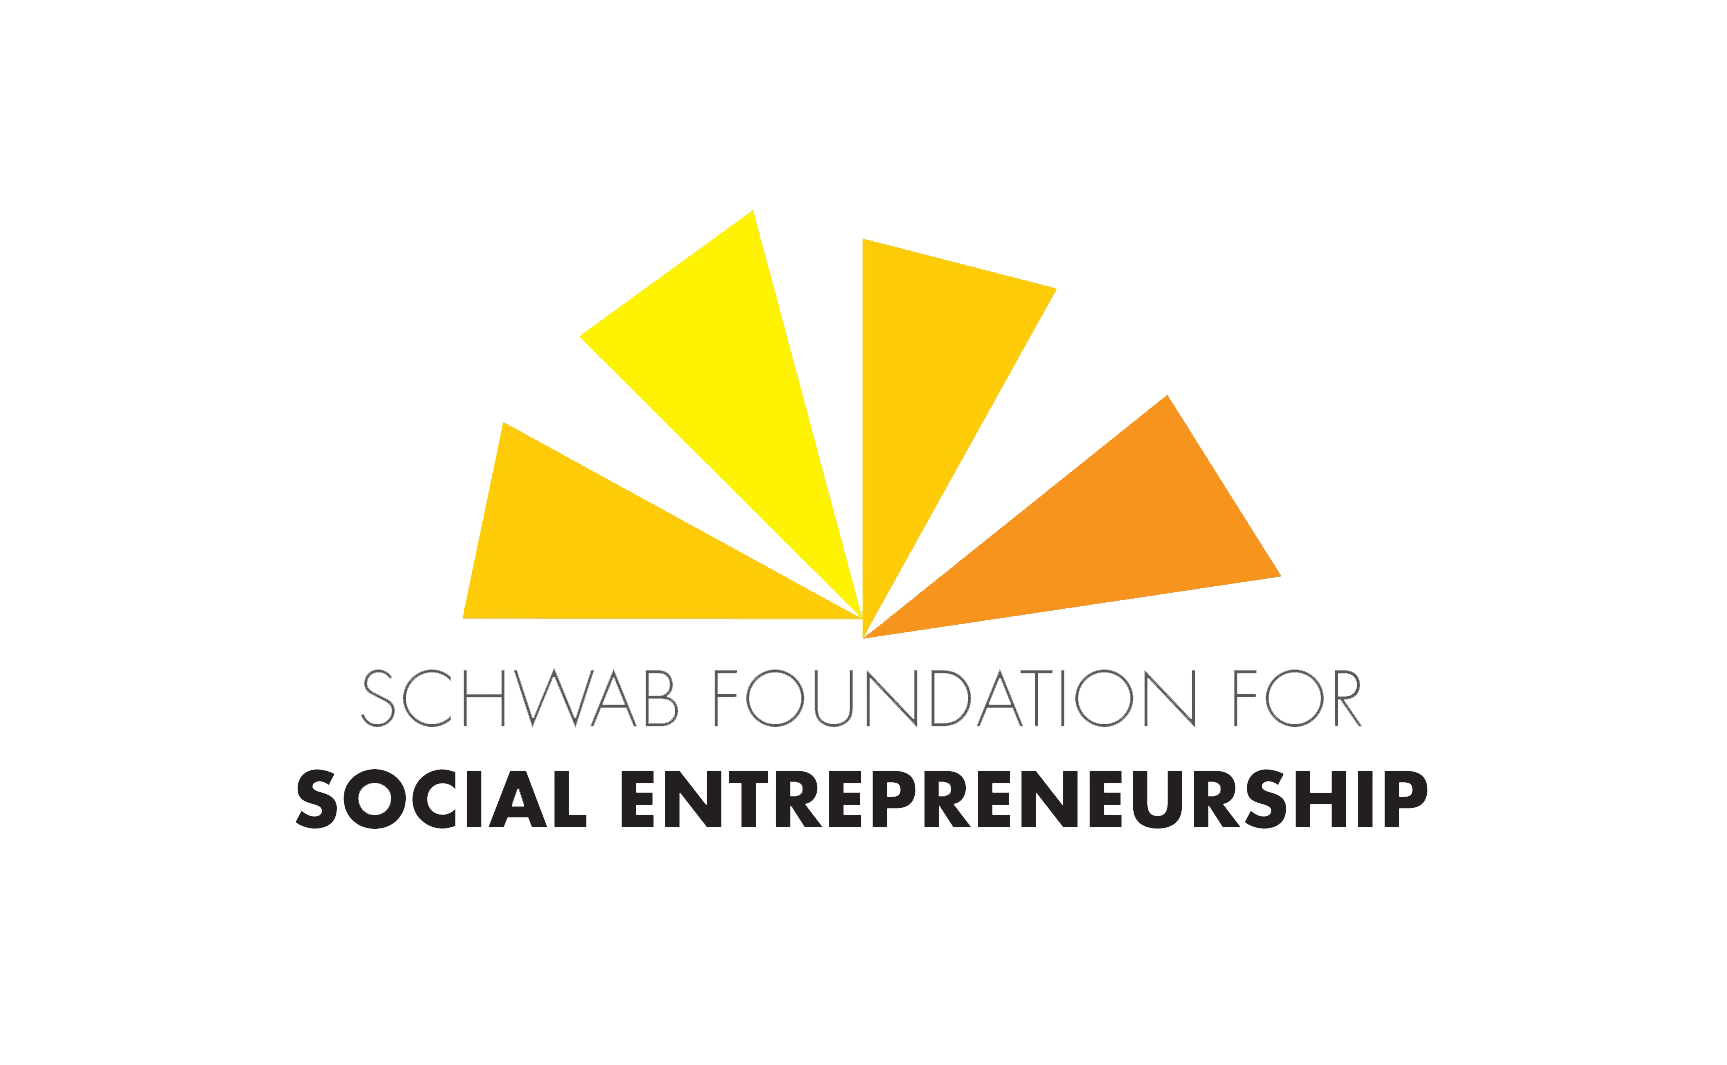 Schwab Foundation for Social Entrepreneurship logo